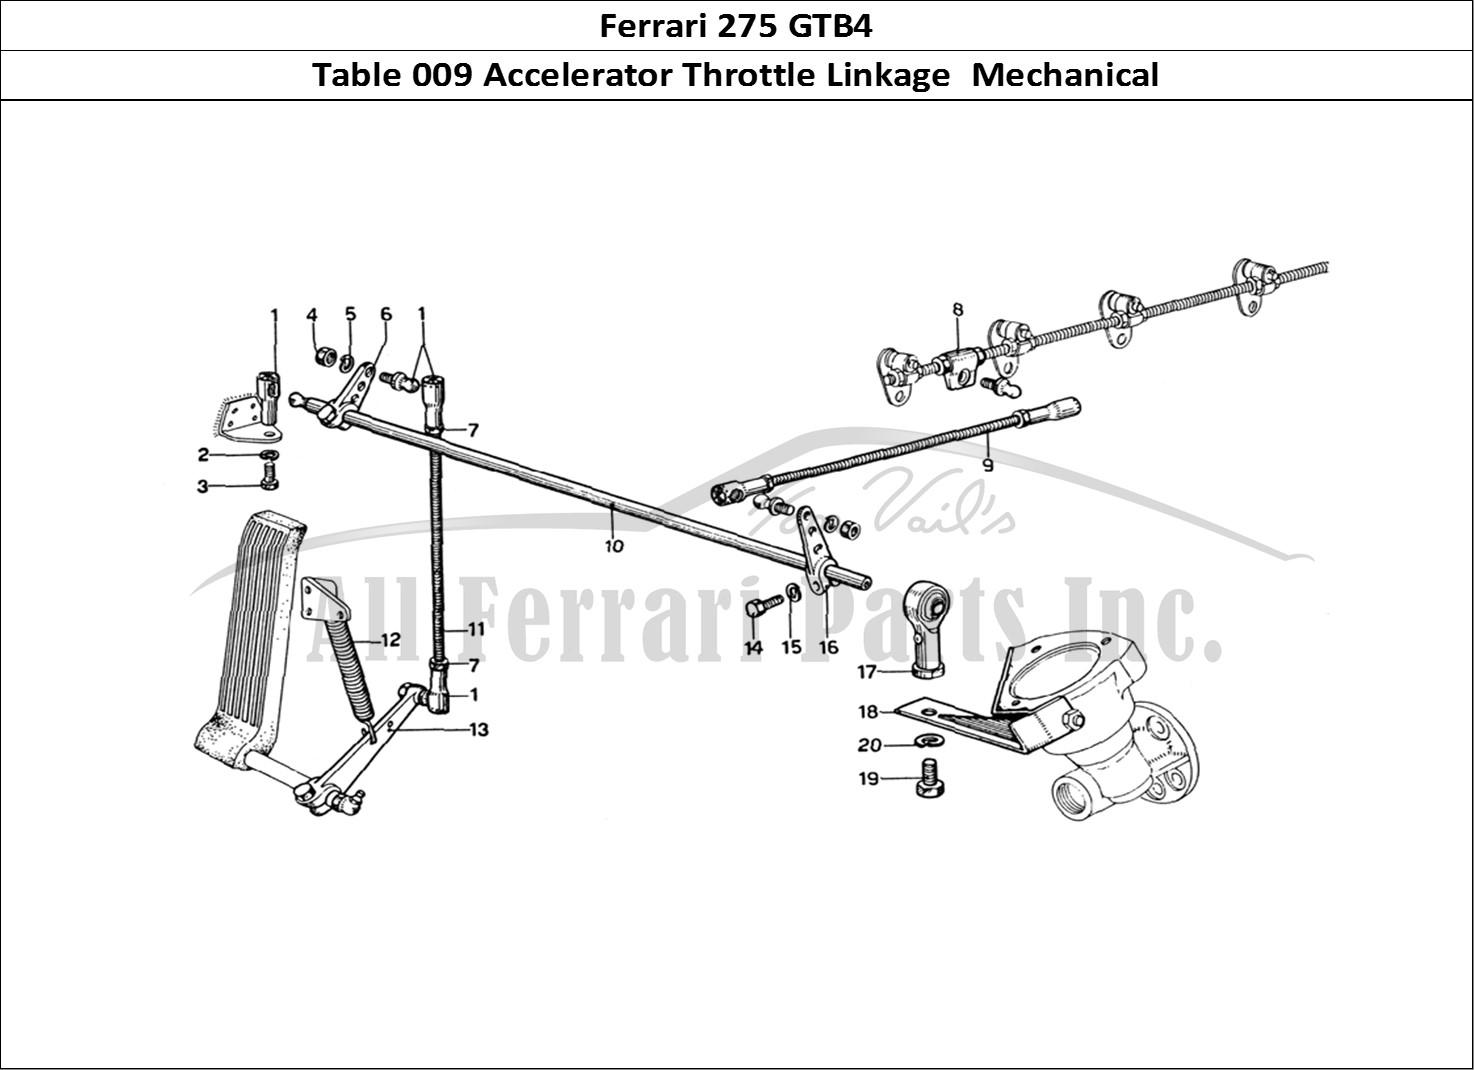 Ferrari Parts Ferrari 275 GTB4 Page 009 Mechanic Throttle Control